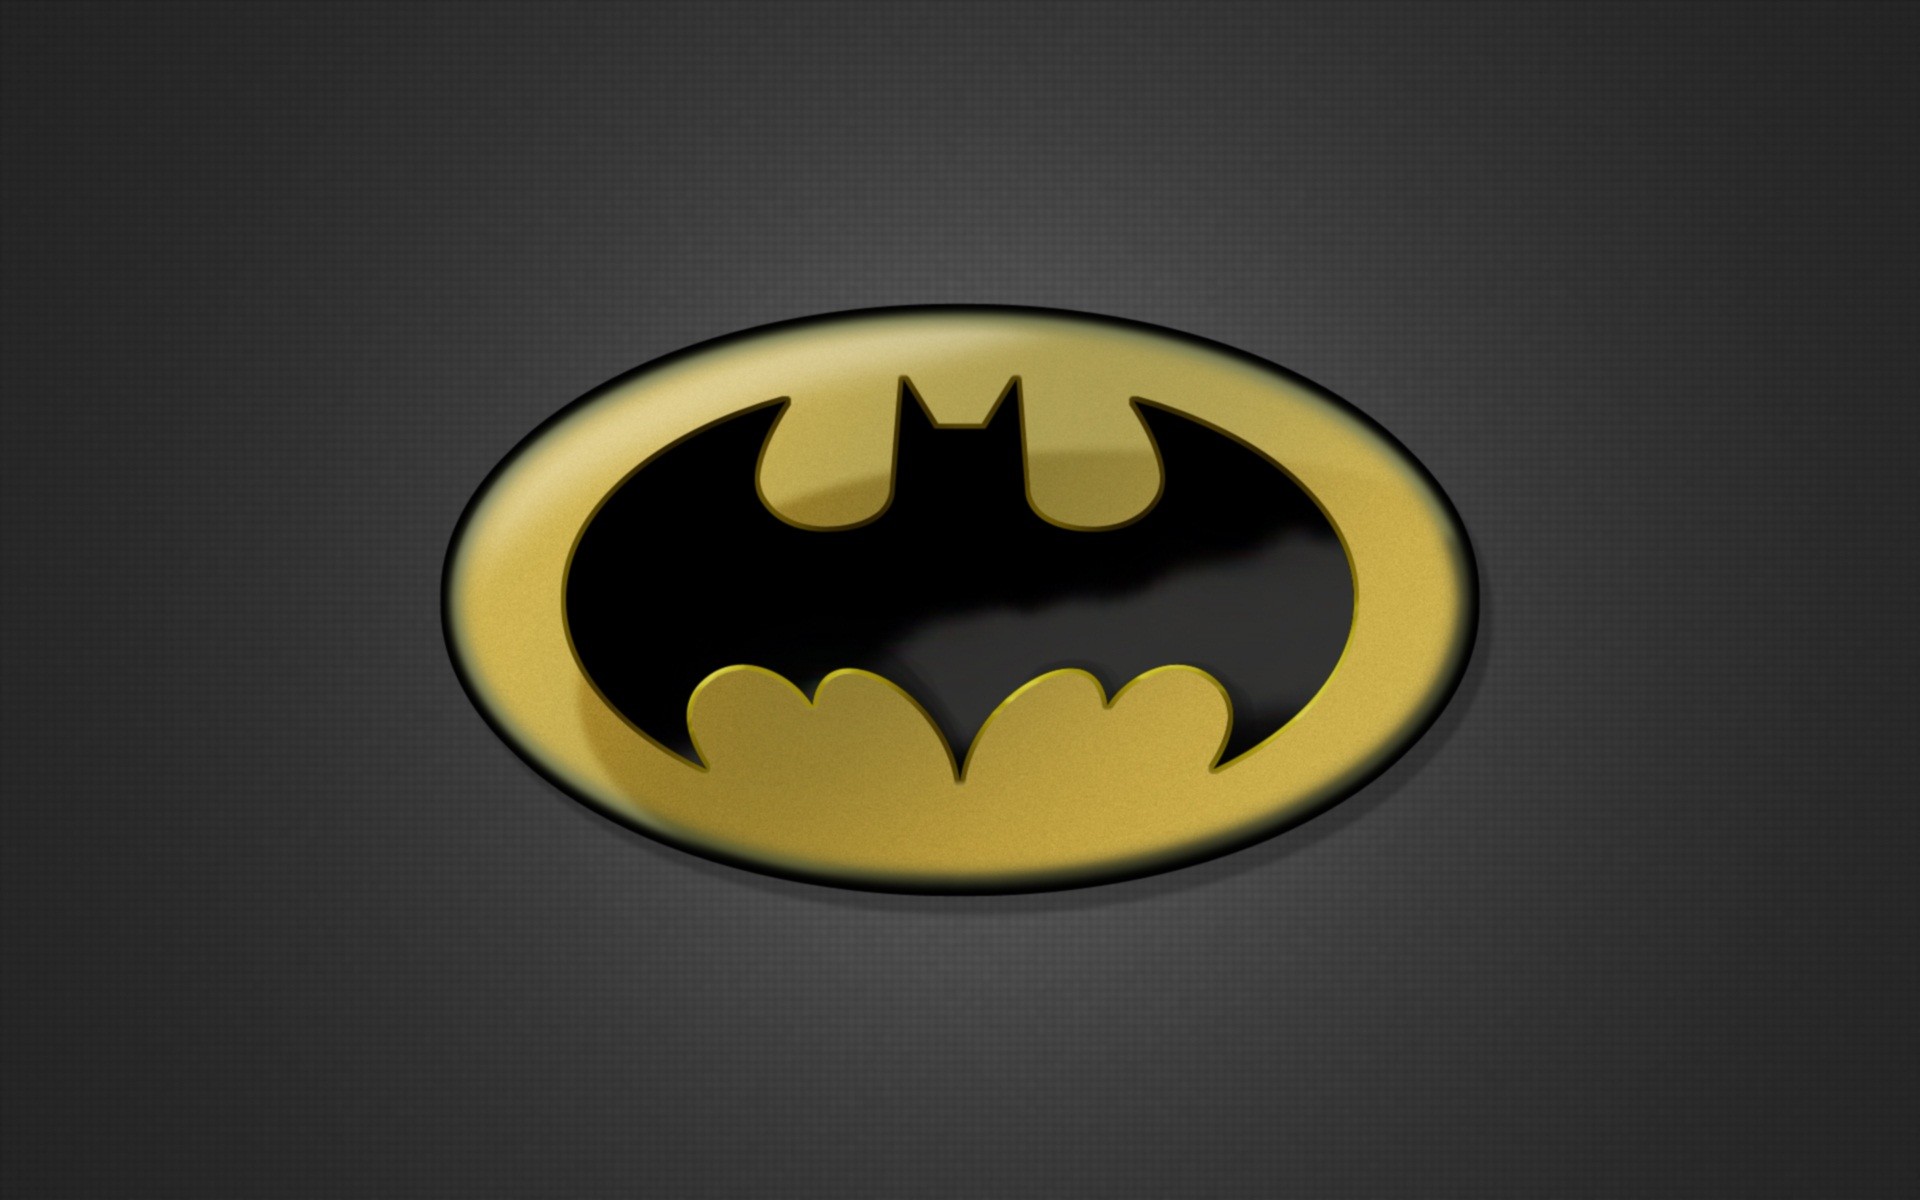 Batman Logo Wallpaper 24031wall.jpg